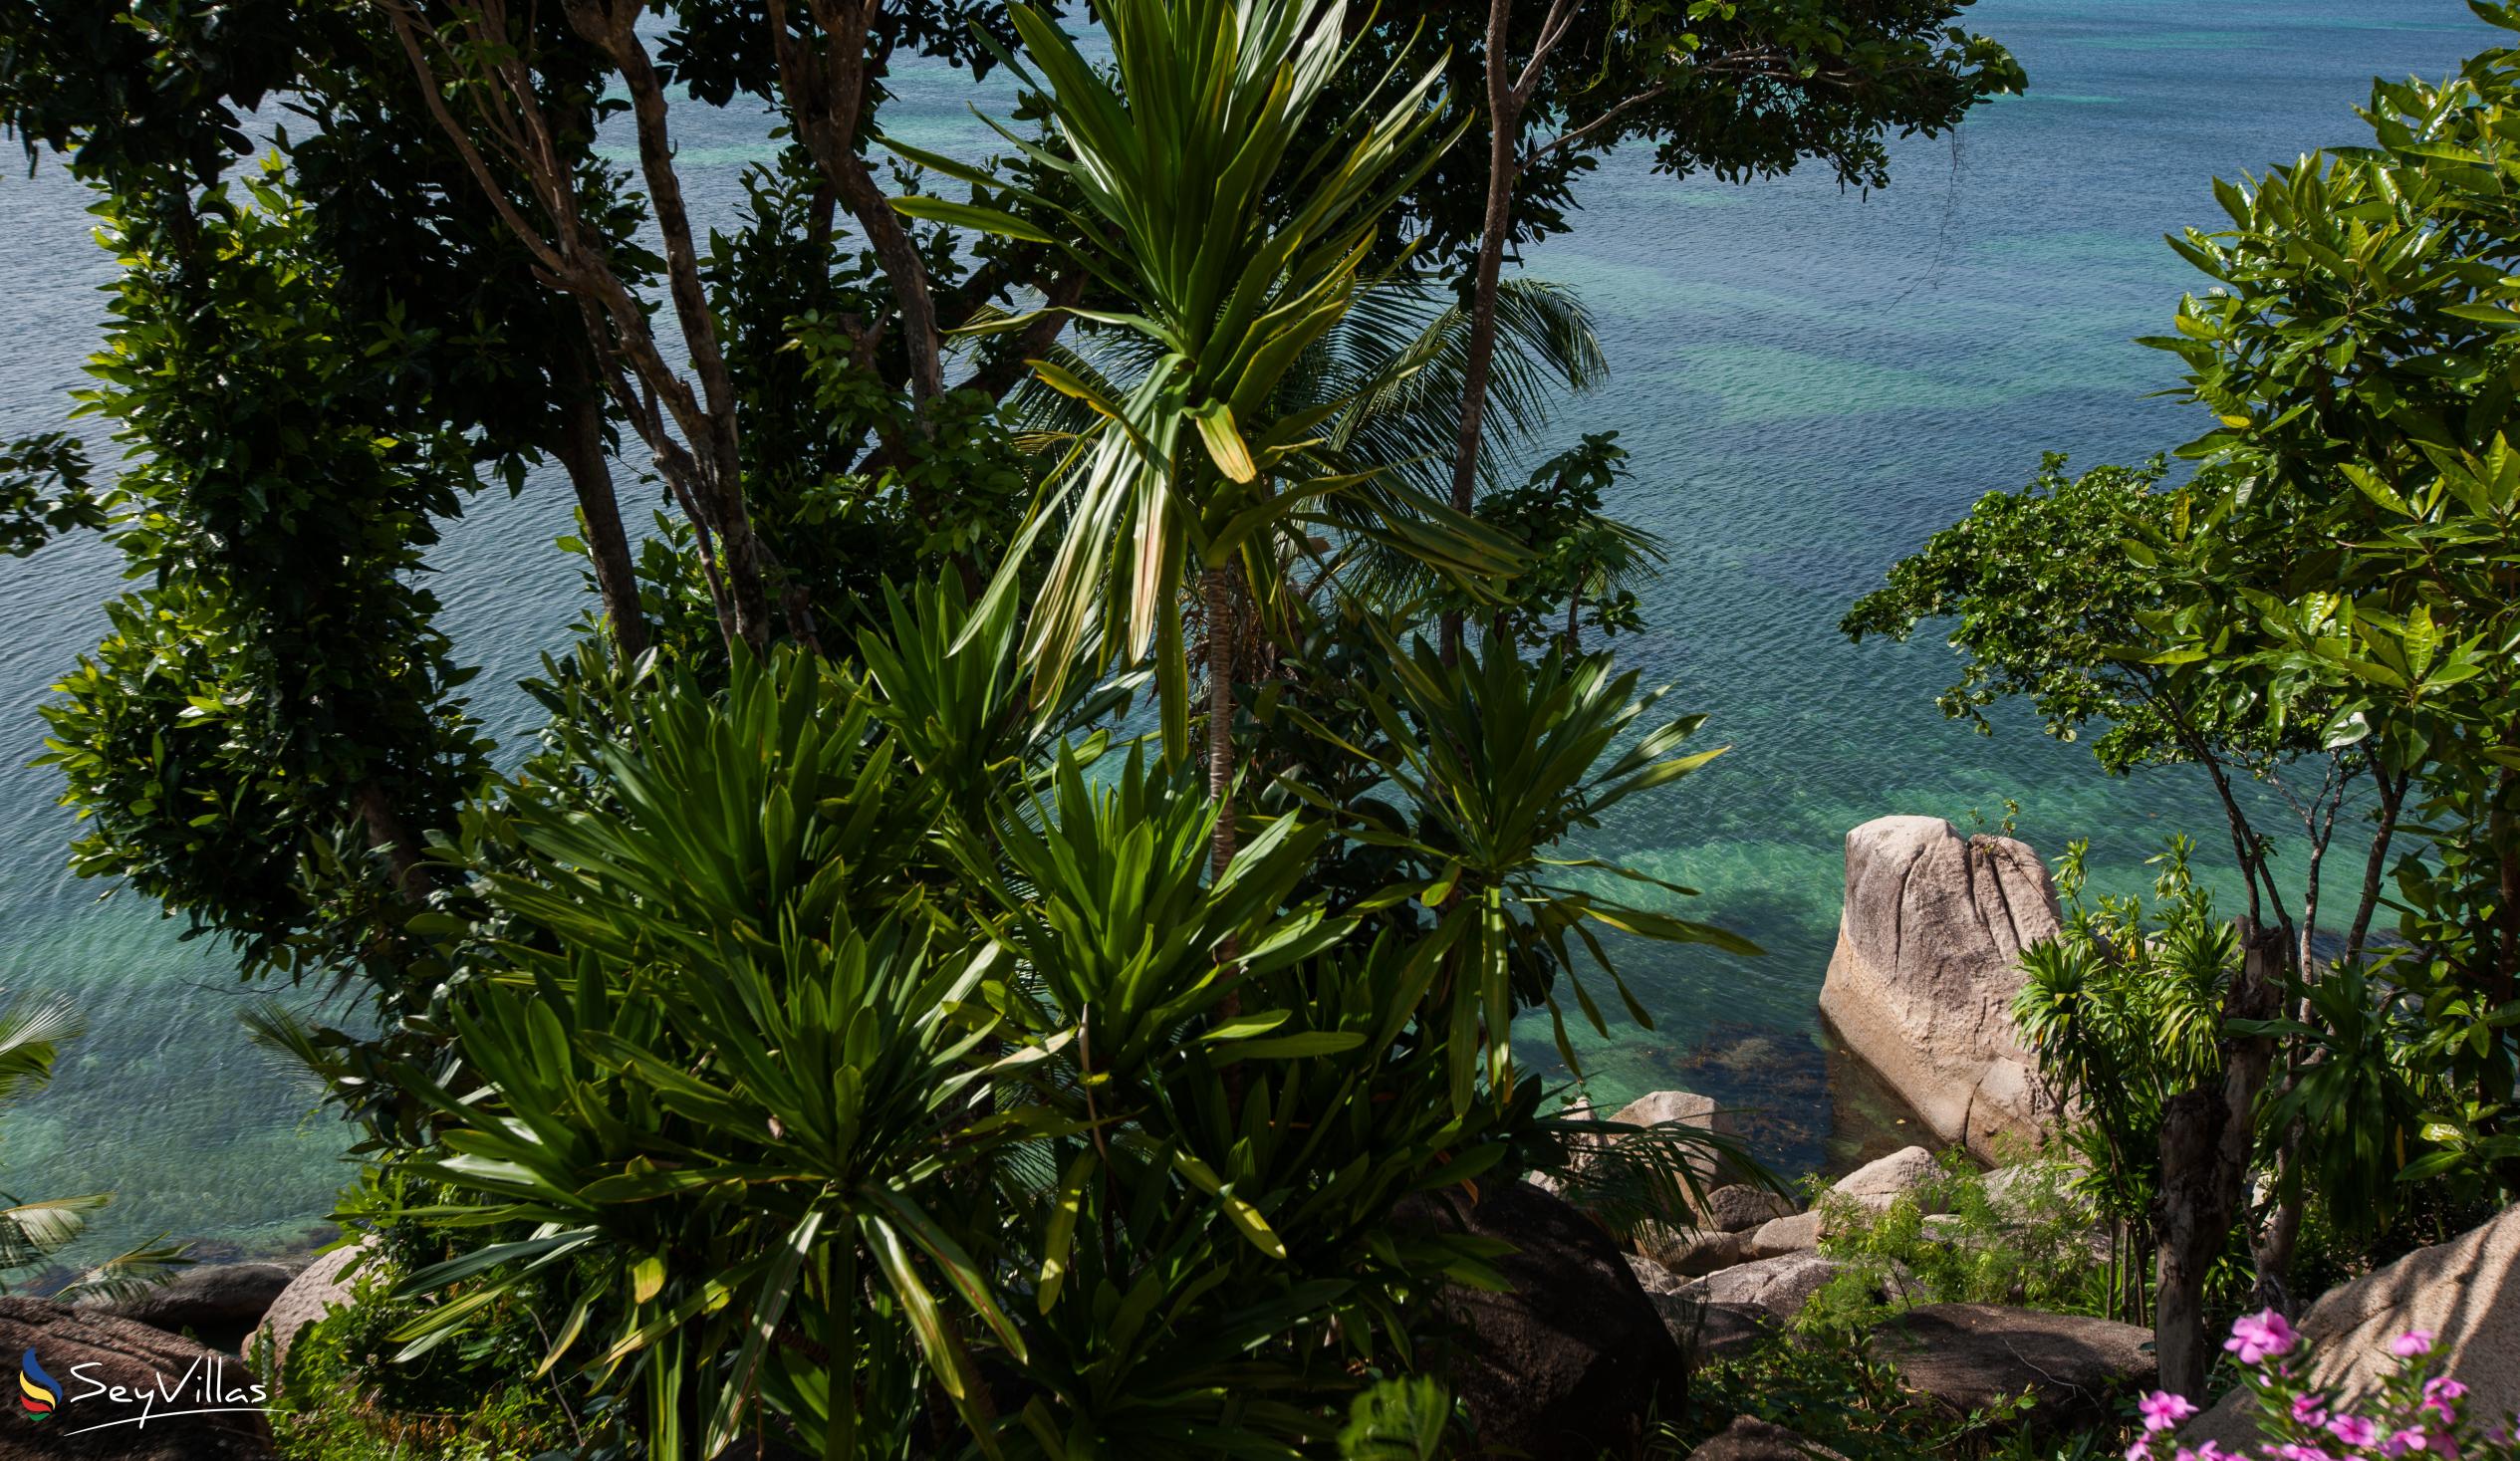 Foto 47: Coco de Mer & Black Parrot Suites - Posizione - Praslin (Seychelles)